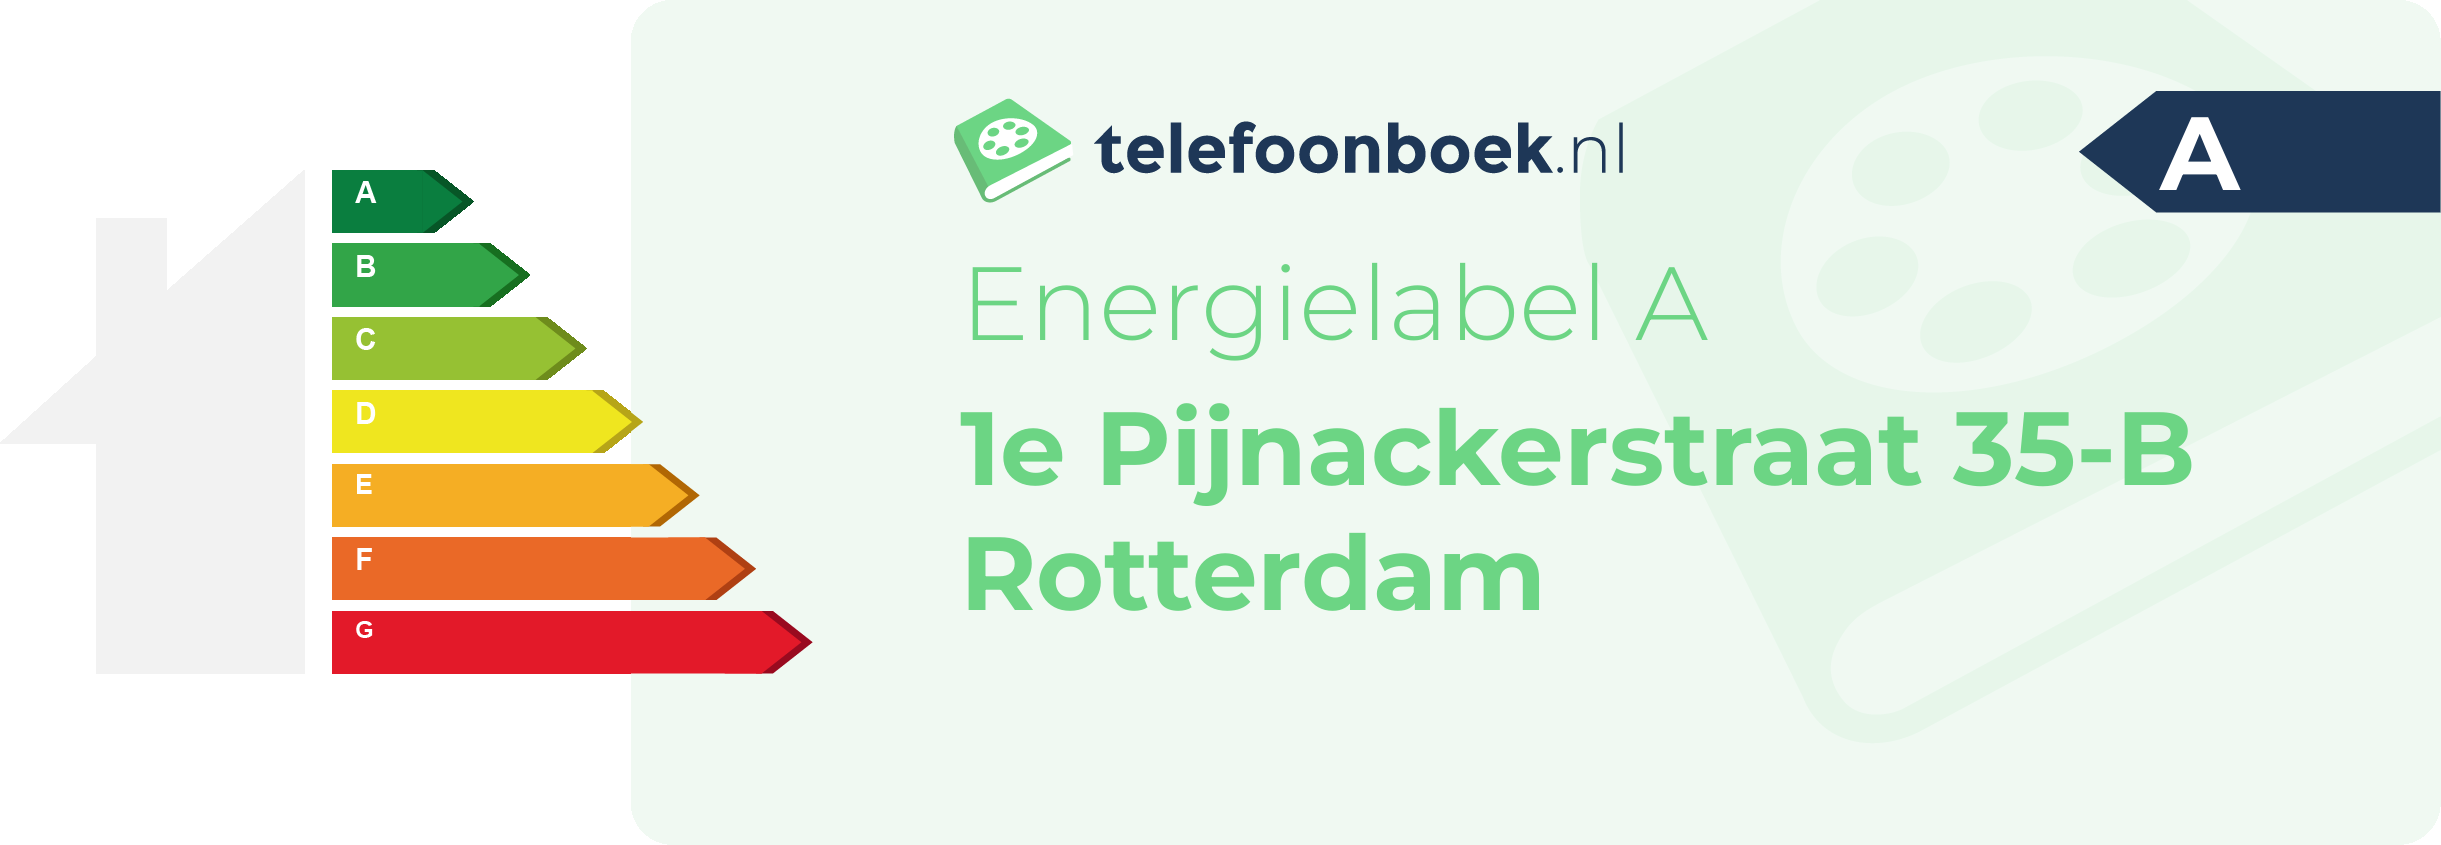 Energielabel 1e Pijnackerstraat 35-B Rotterdam